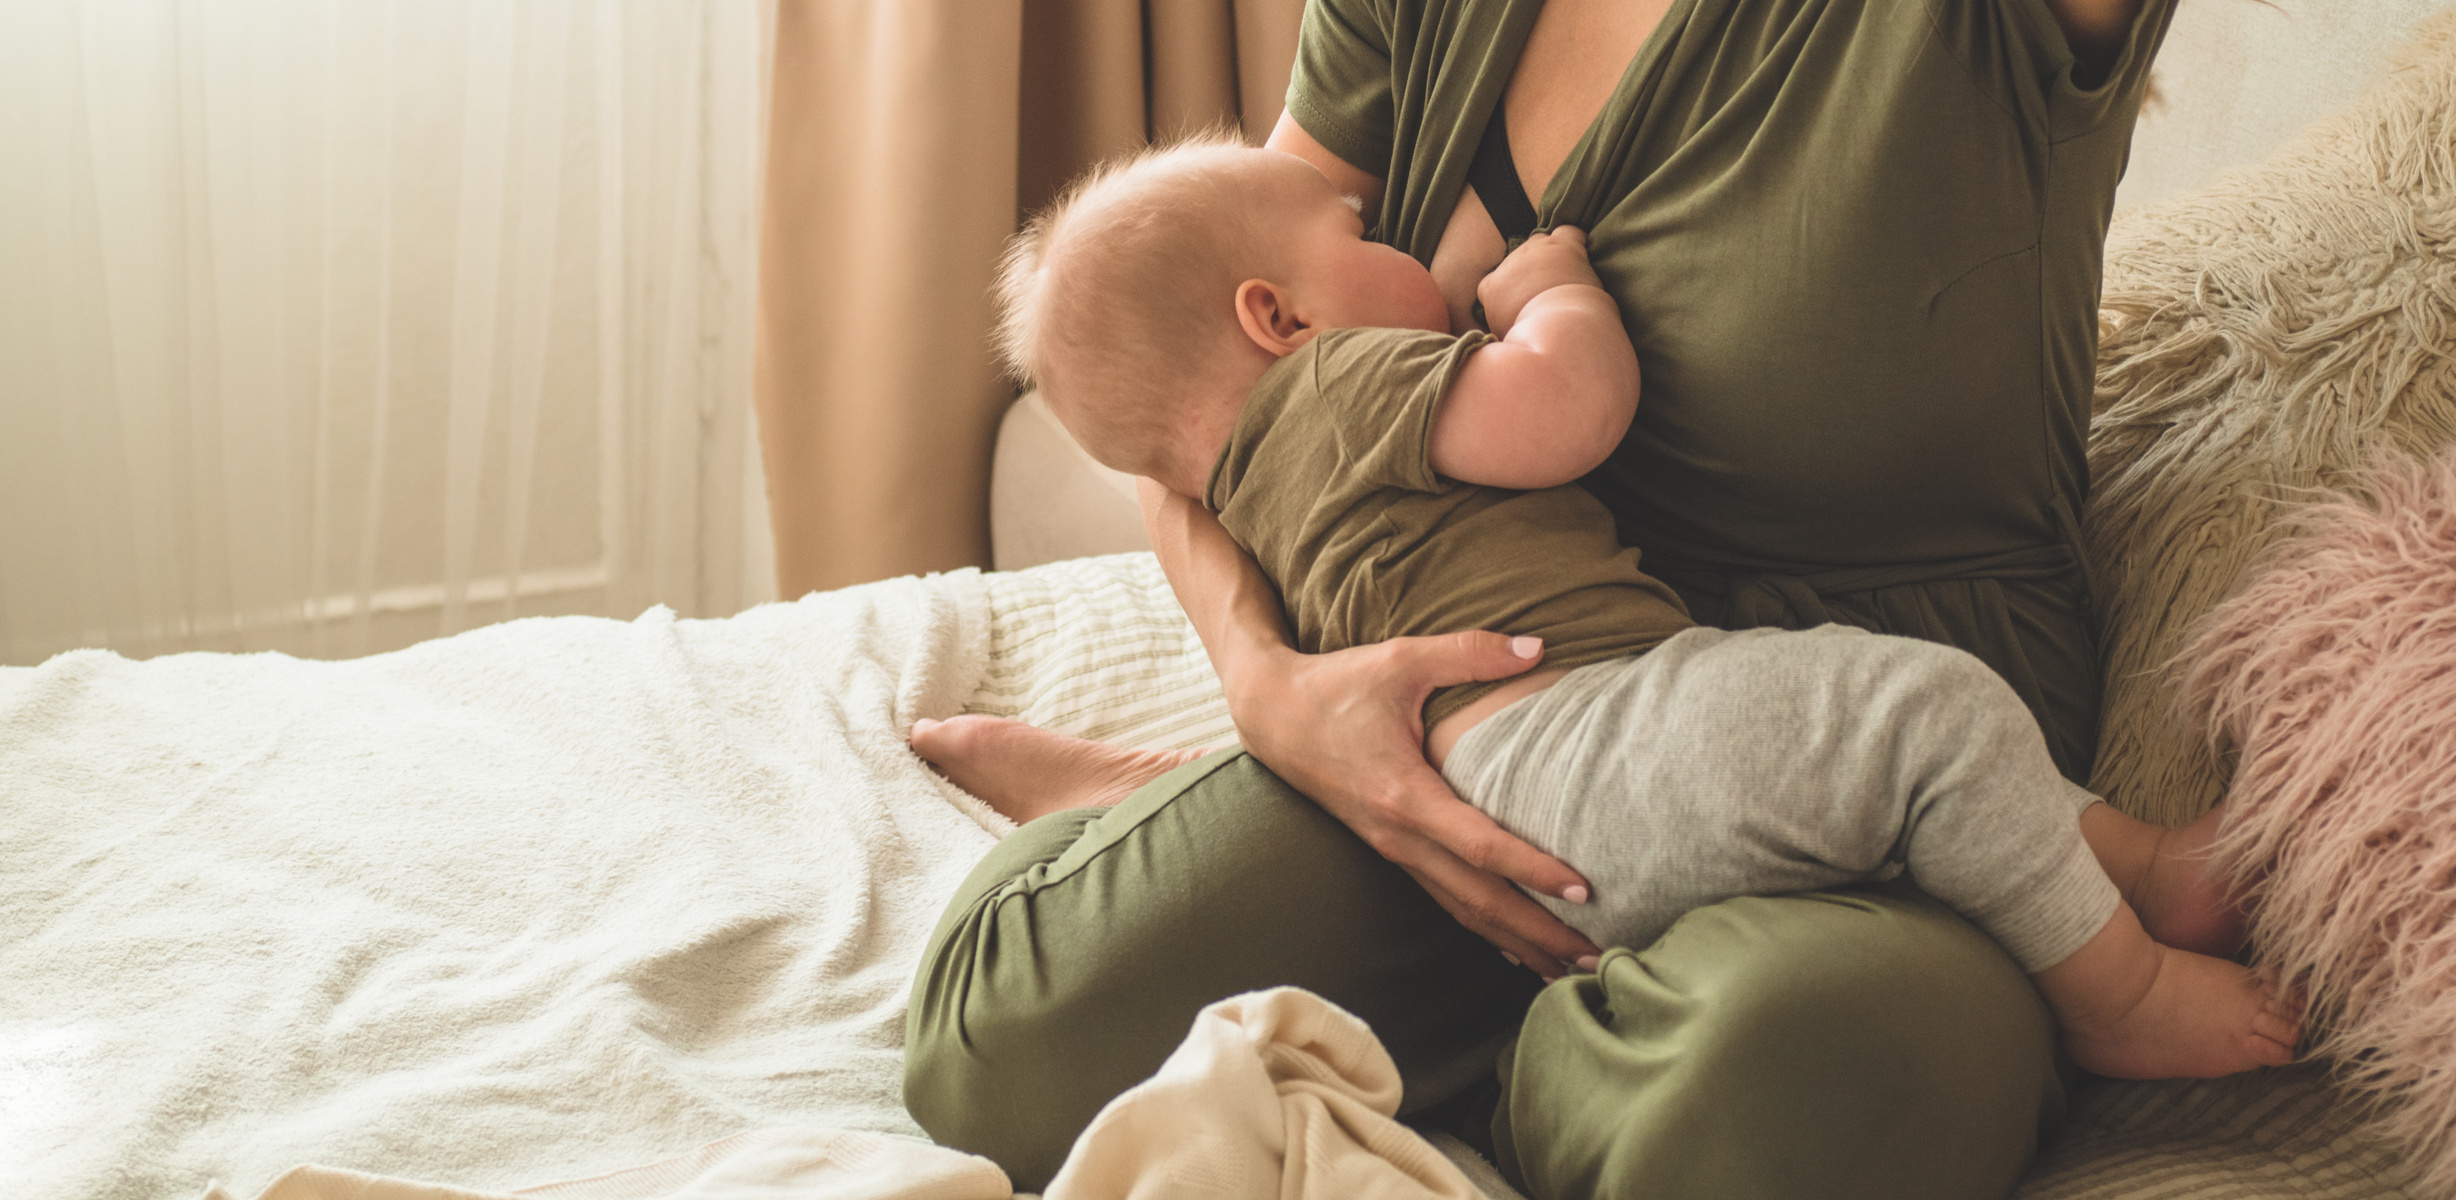 Portrait of mom and breastfeeding baby.